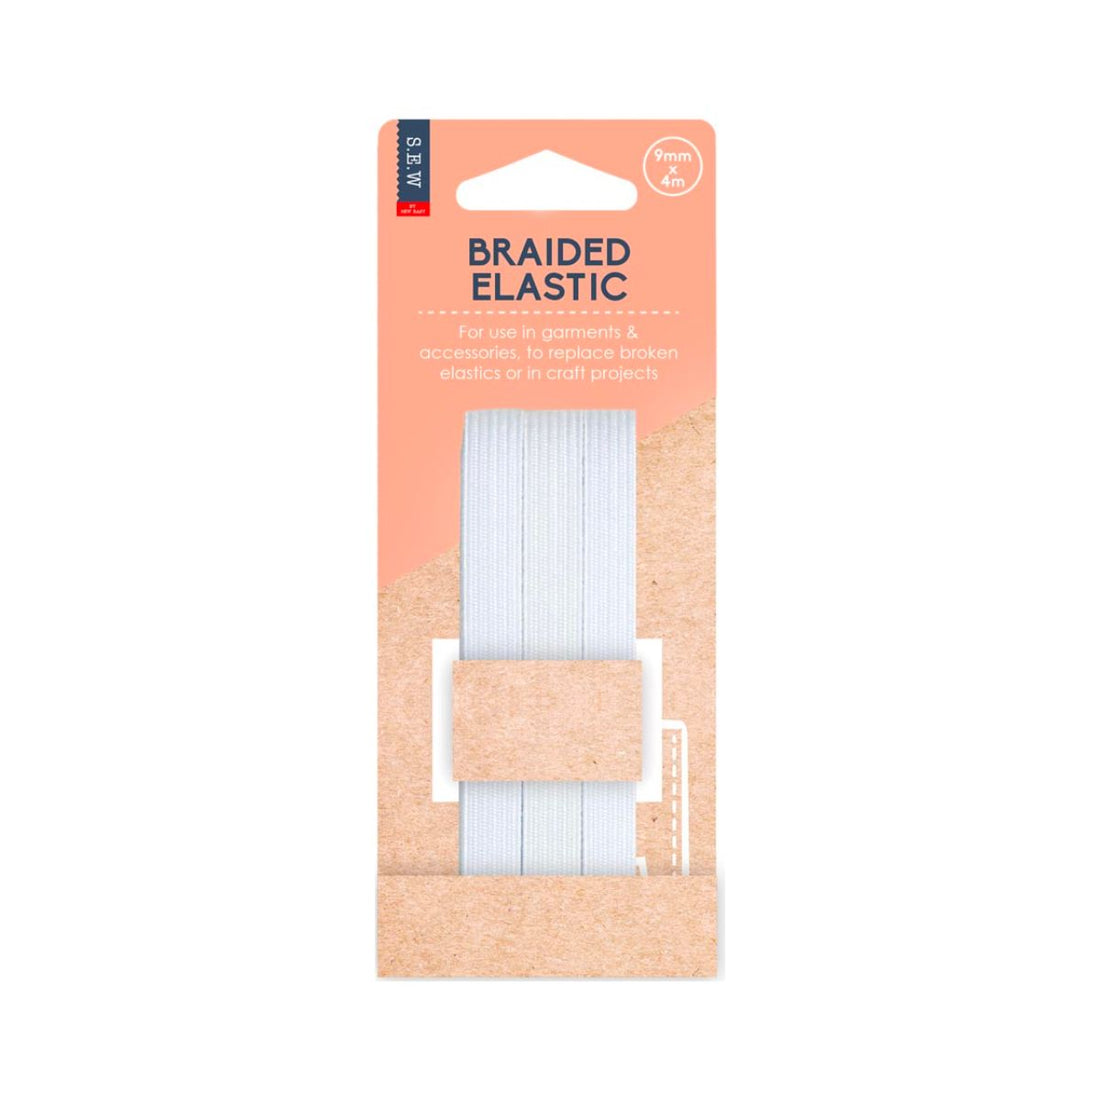 SEW white elastic braided 9mm x4m